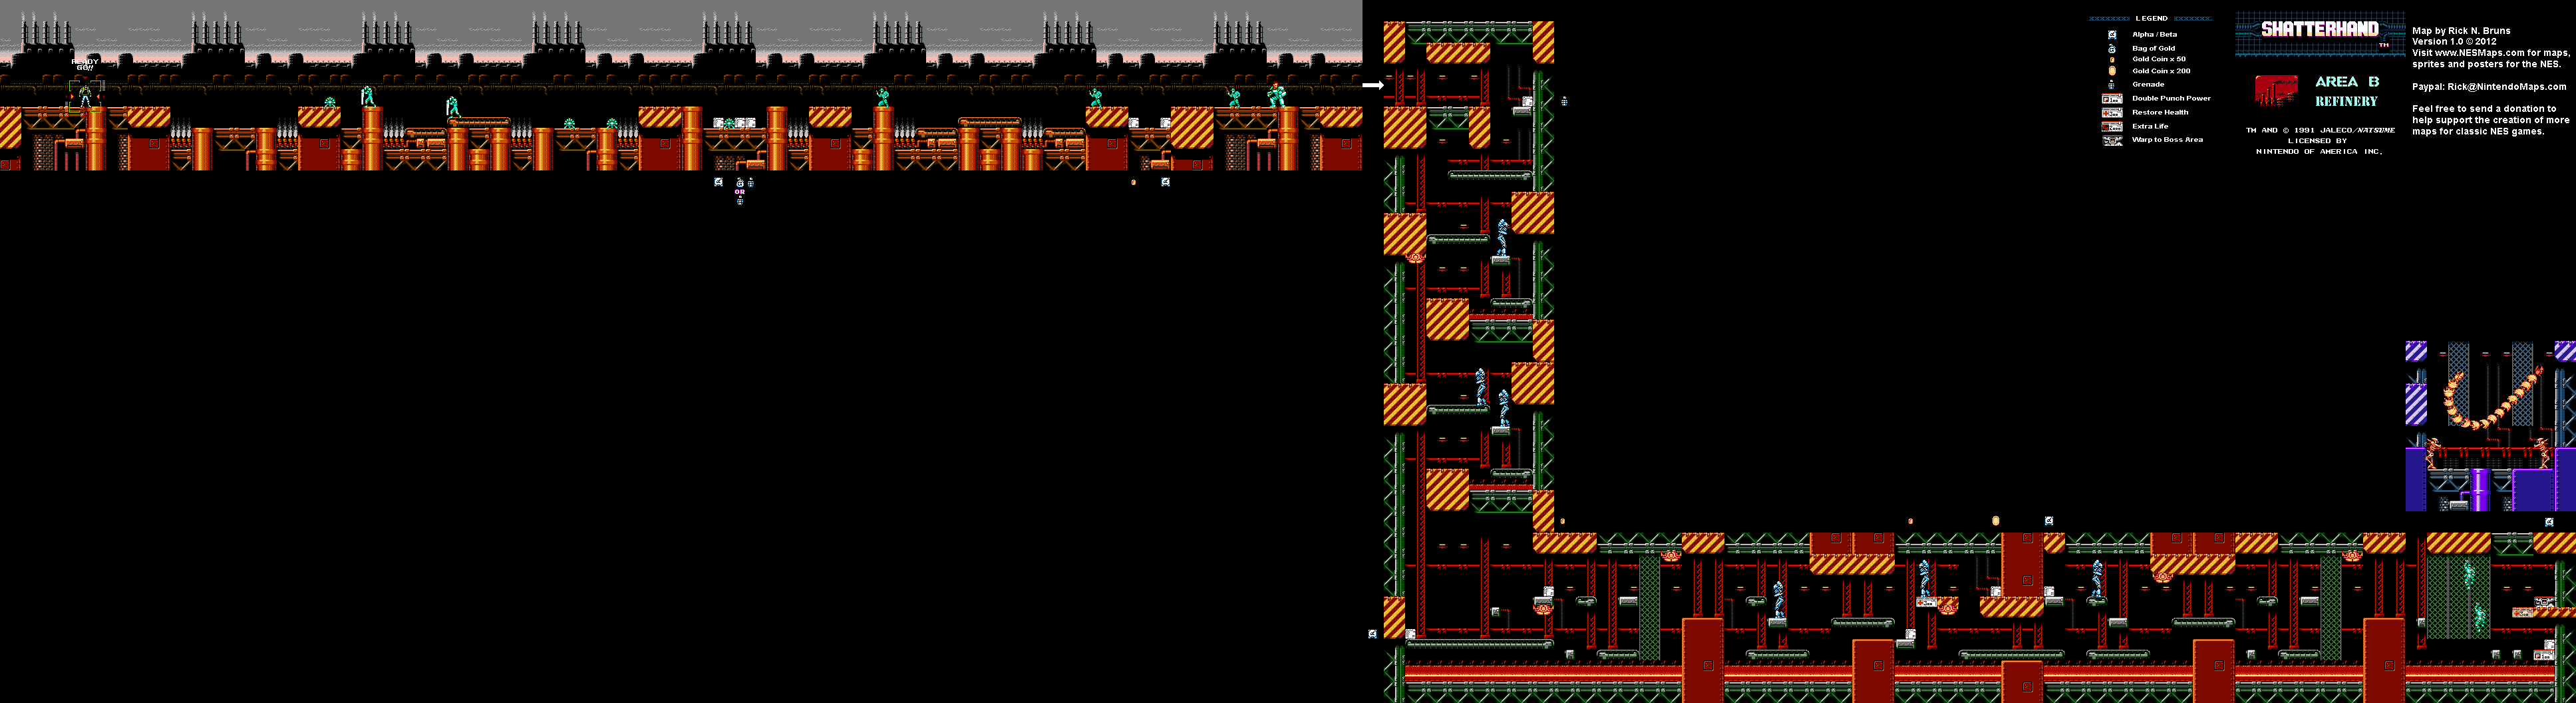 Shatterhand - Area B Refinery - Nintendo NES Map